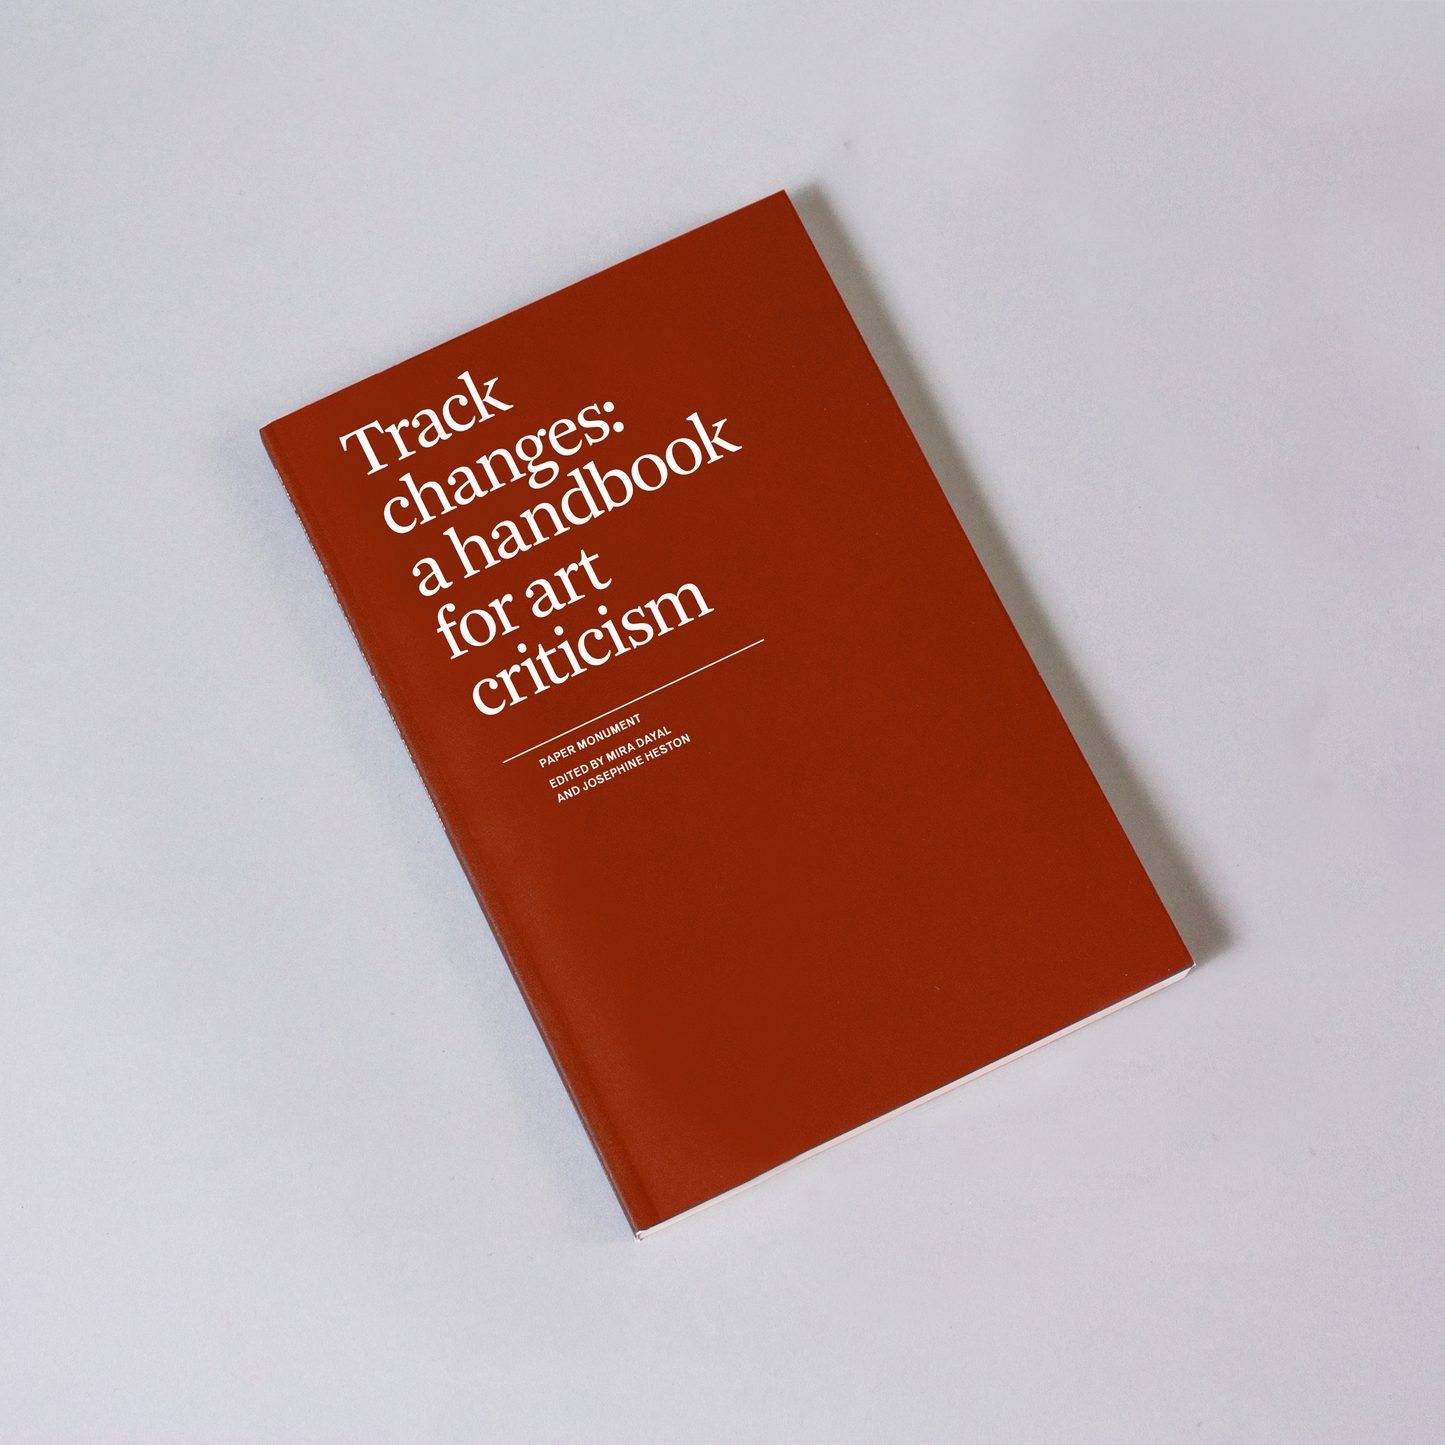 Track Changes: A Handbook for Art Criticism